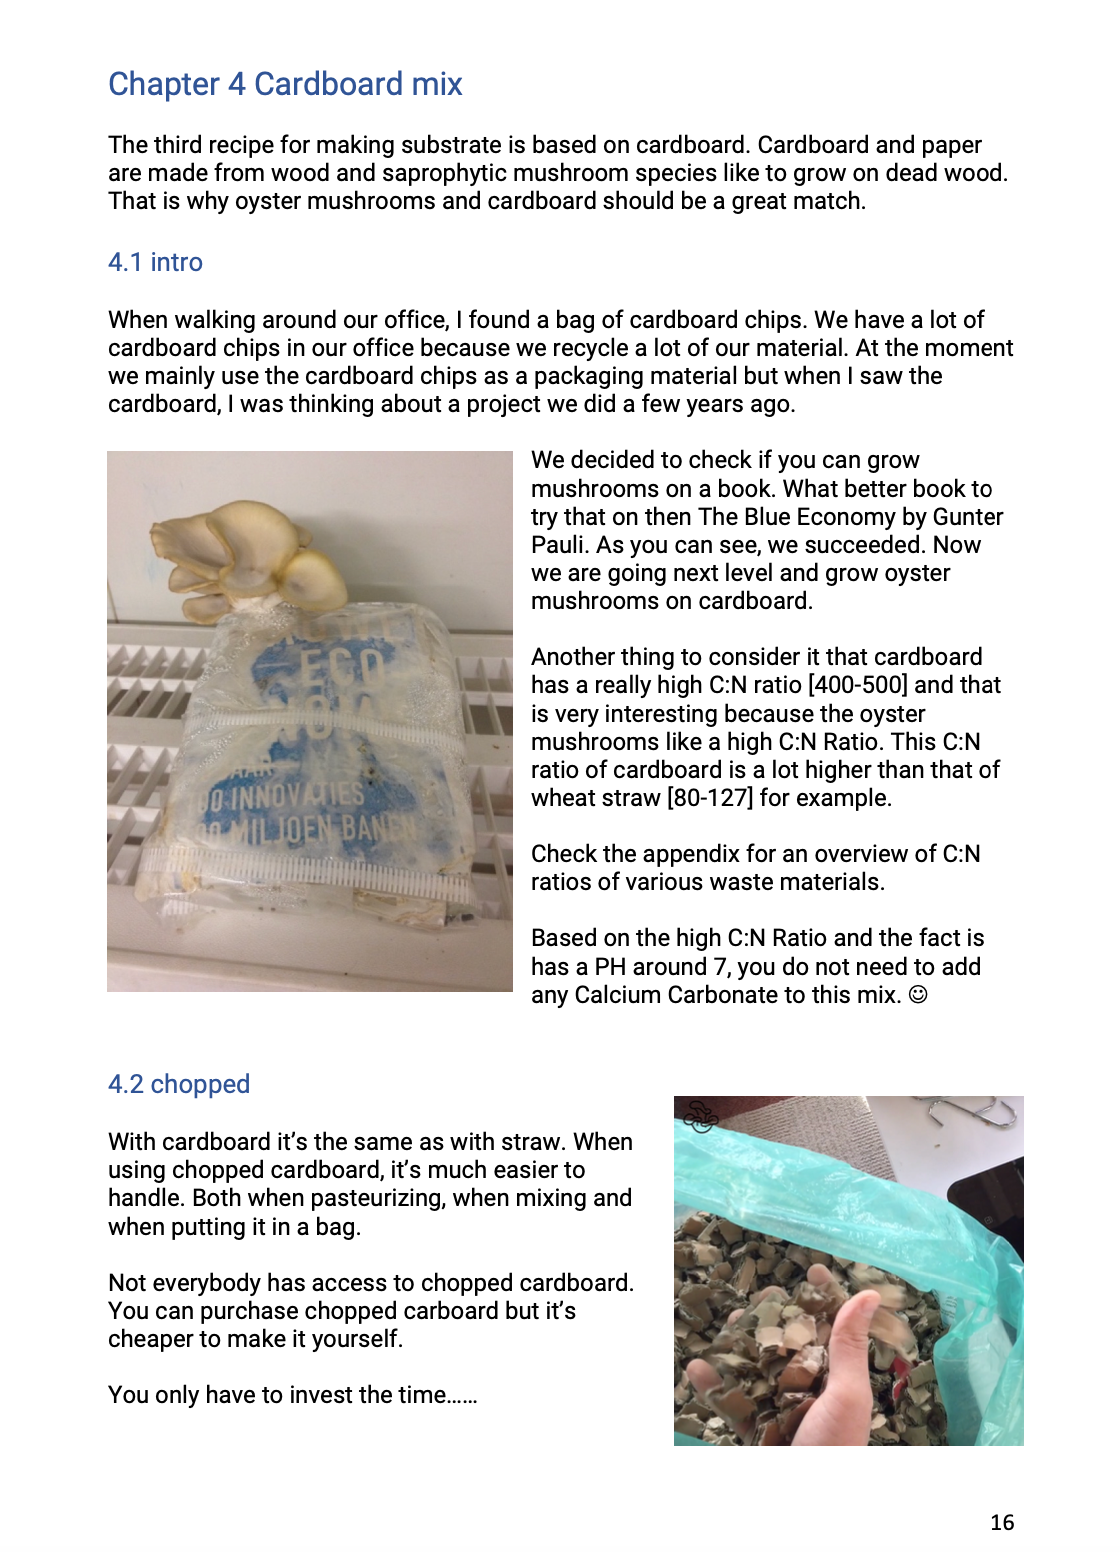 E-book - 3 mushroom substrate recipes for the small mushroom grower